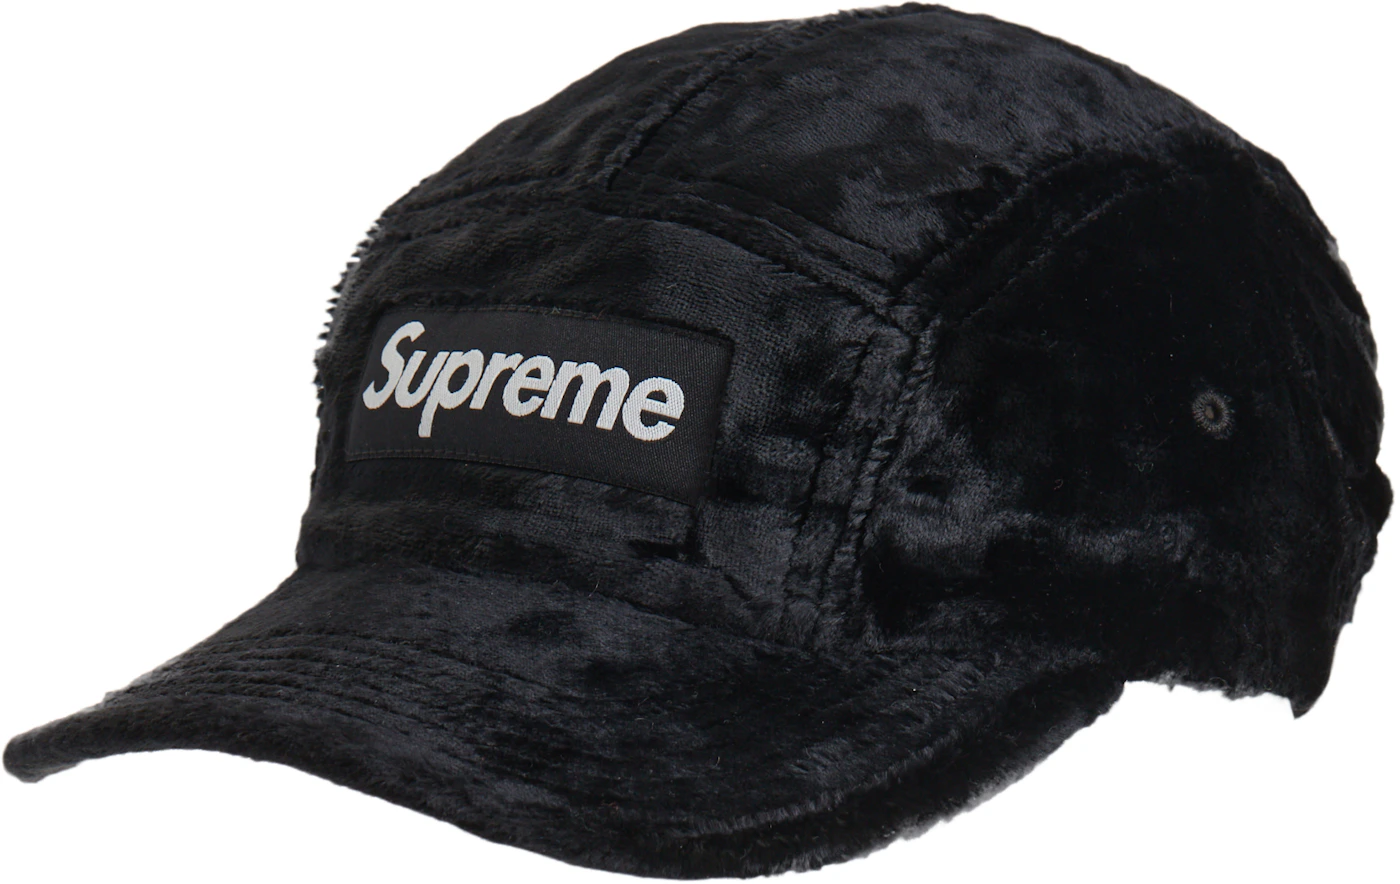 supreme cap price